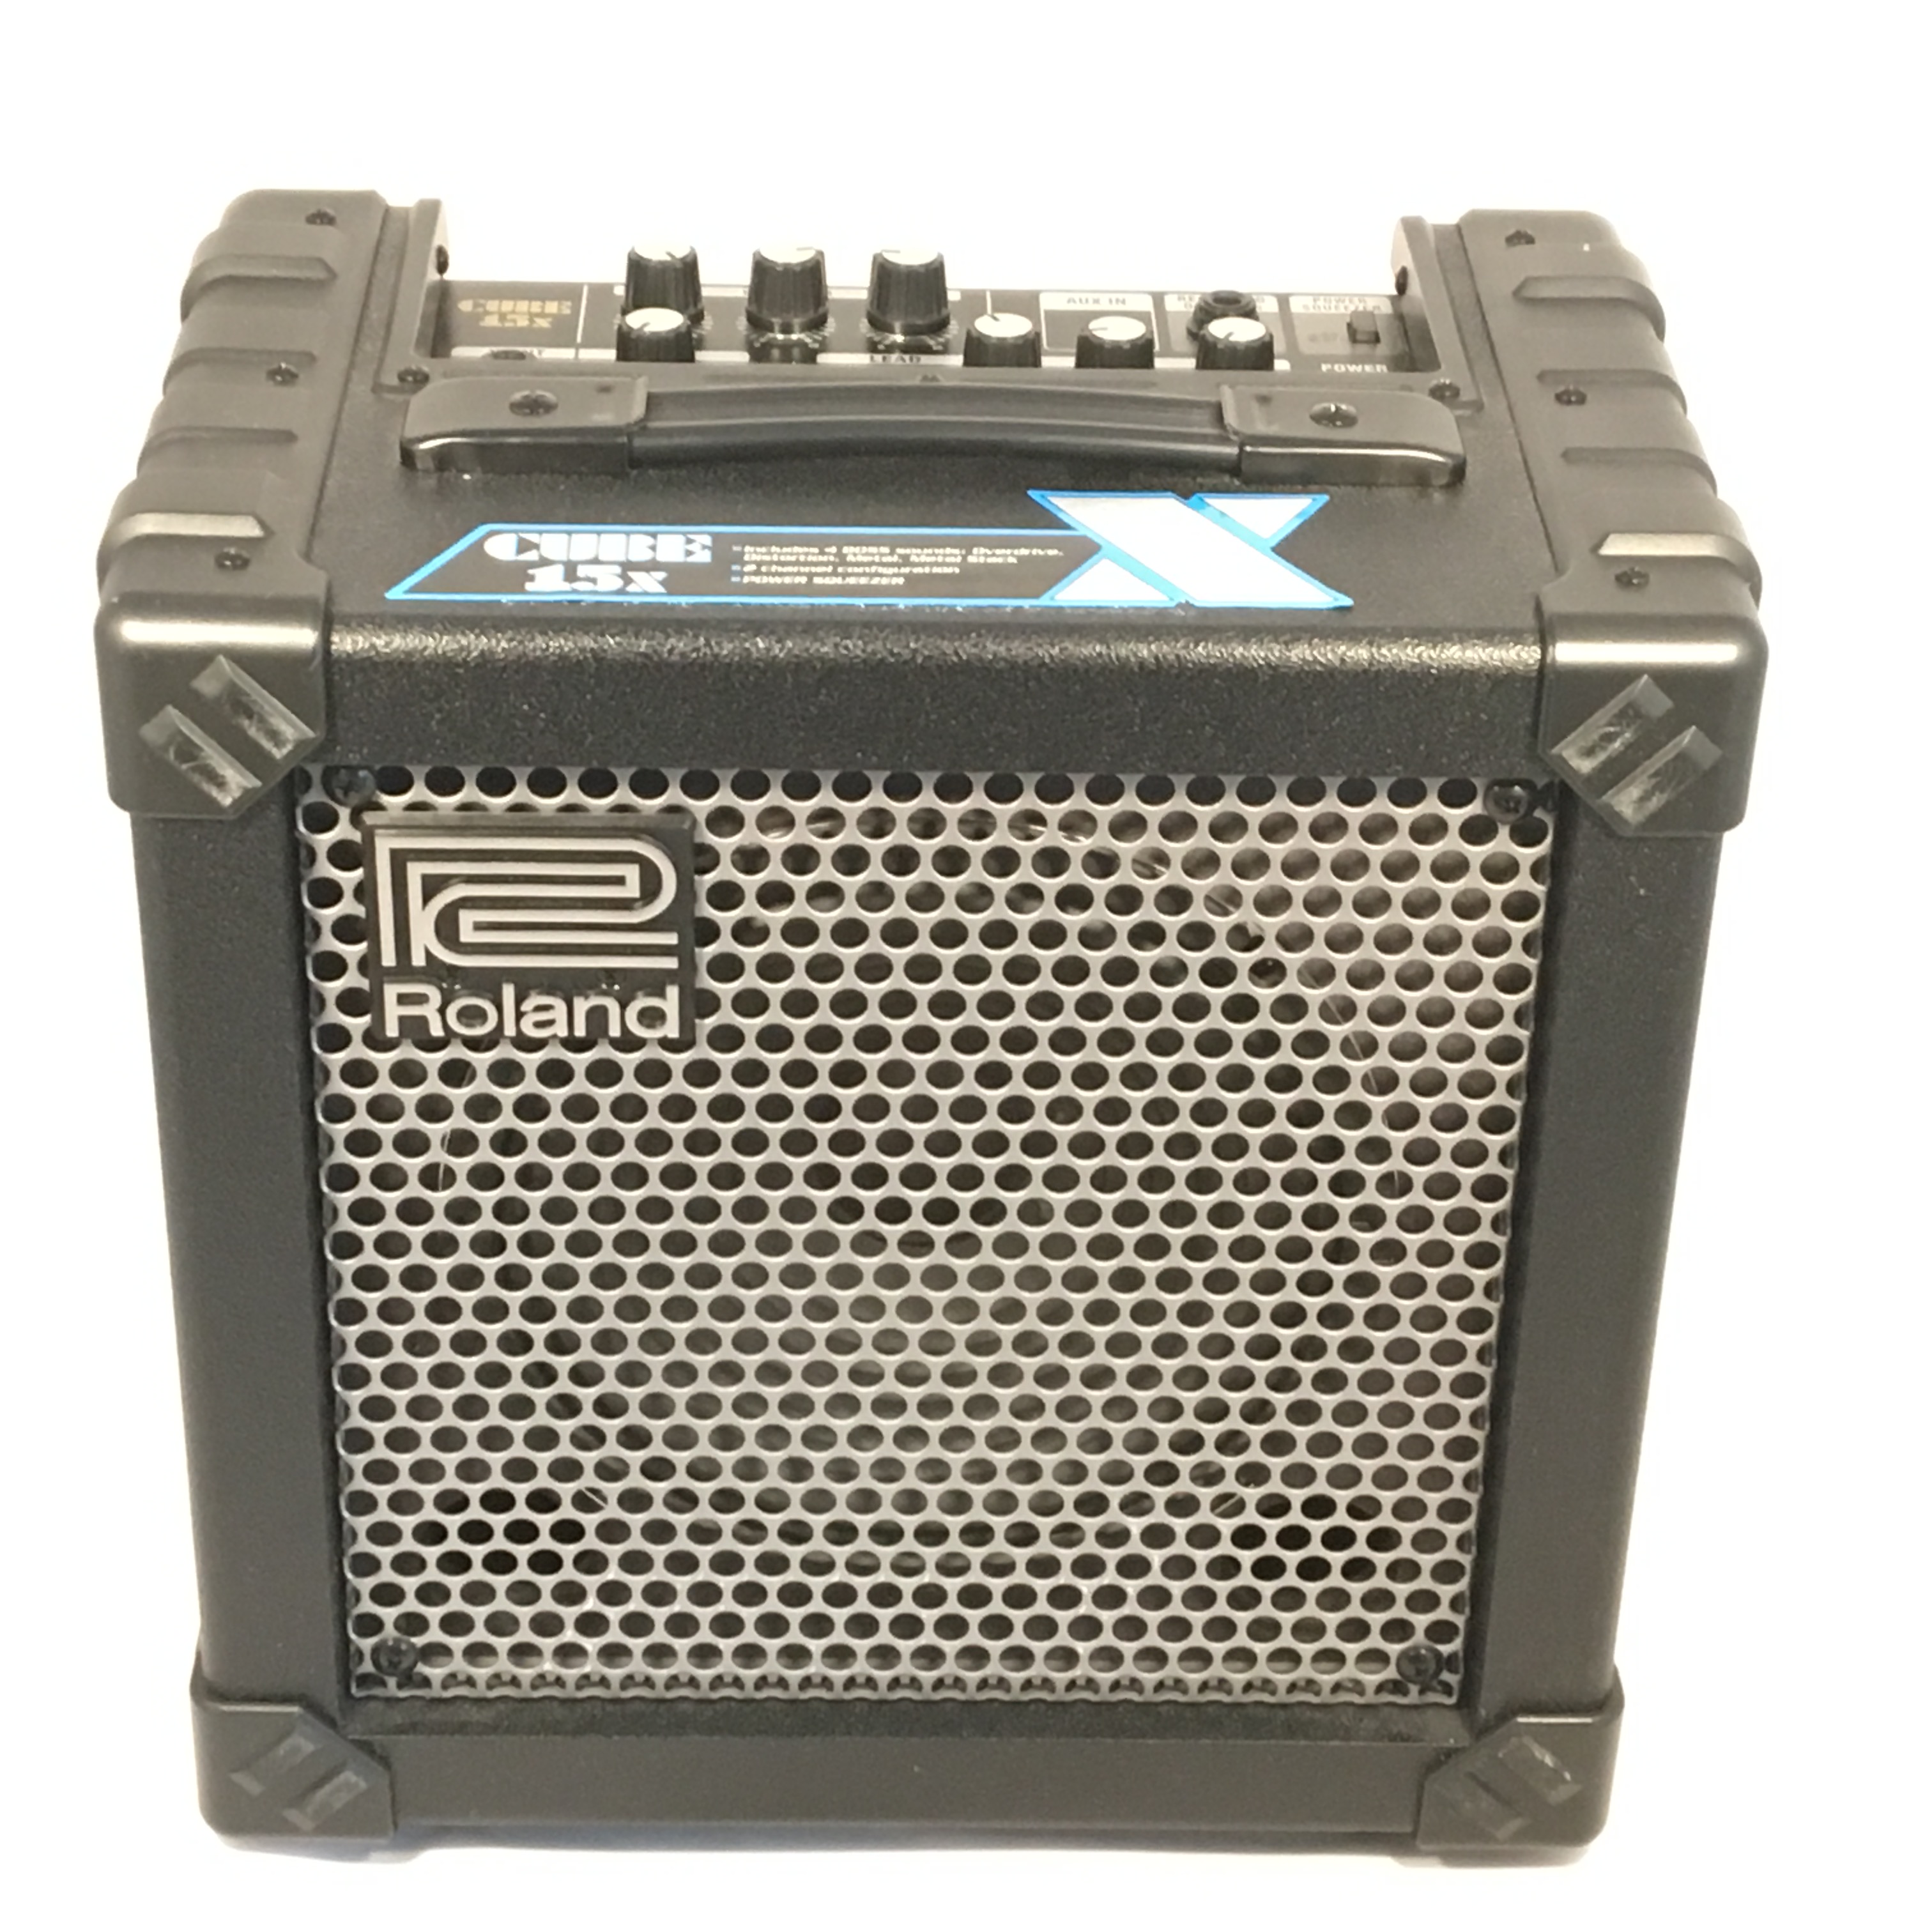 Roland Cube 15. Roland Cube 15x. Басовый комбо Roland Cube - 100b. Комбик Roland Cube 15x. Cube 15